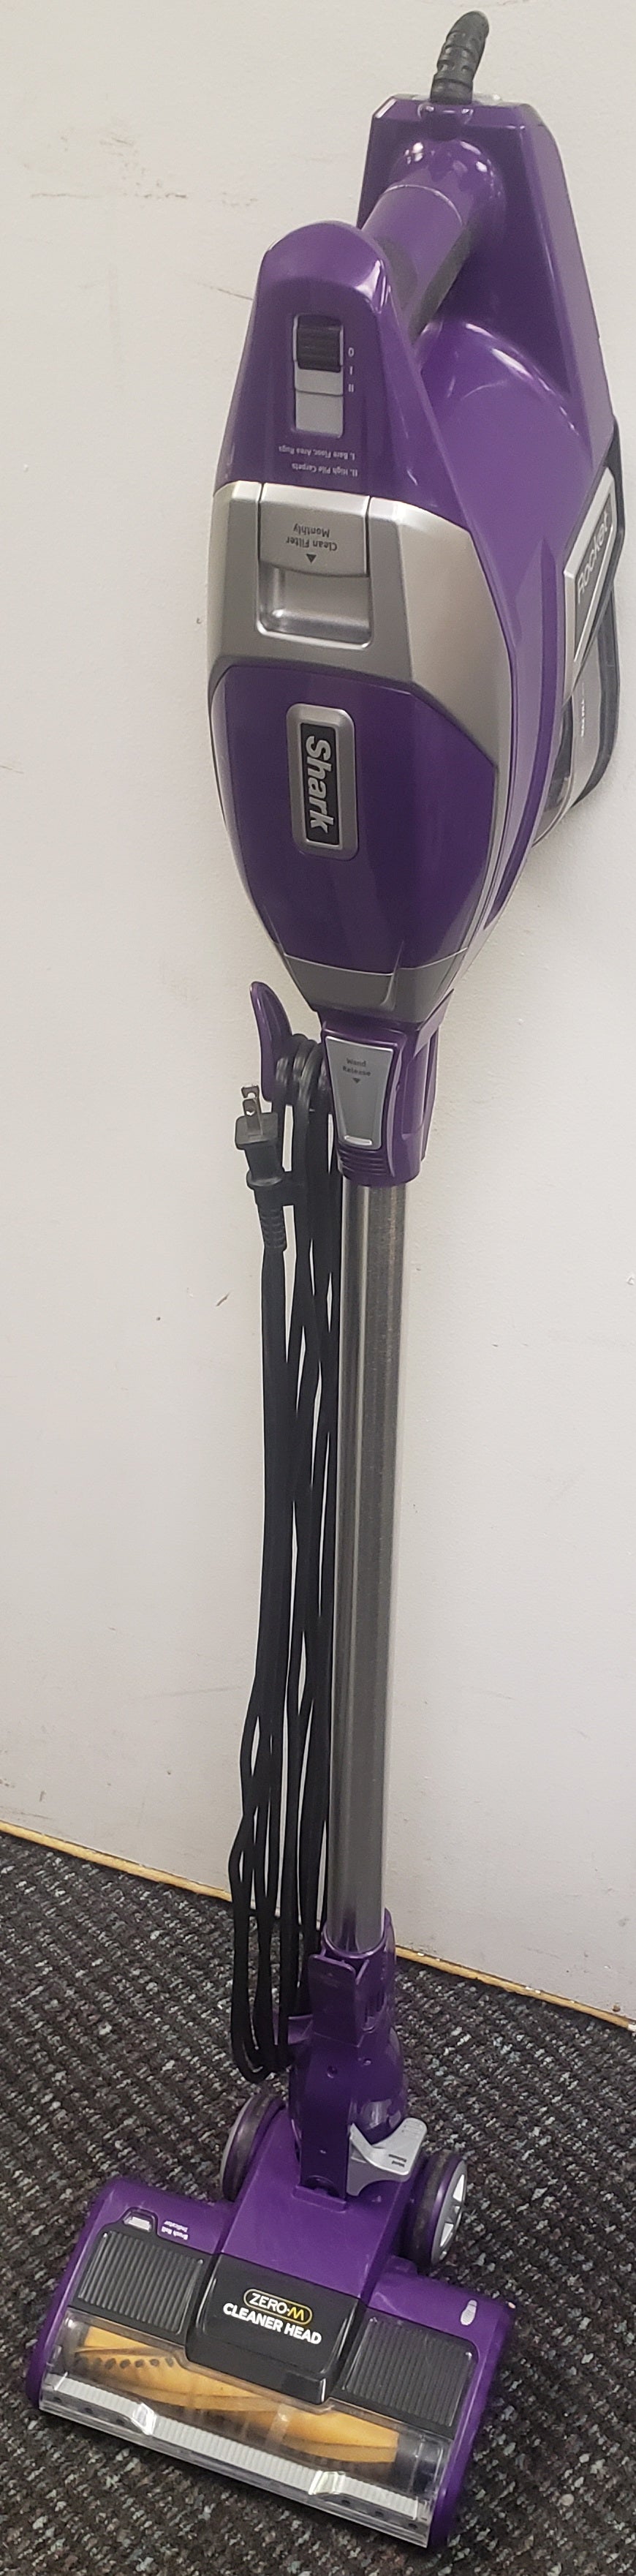 Shark Rocket Zero-M Blue Corded Vacuum Cleaner